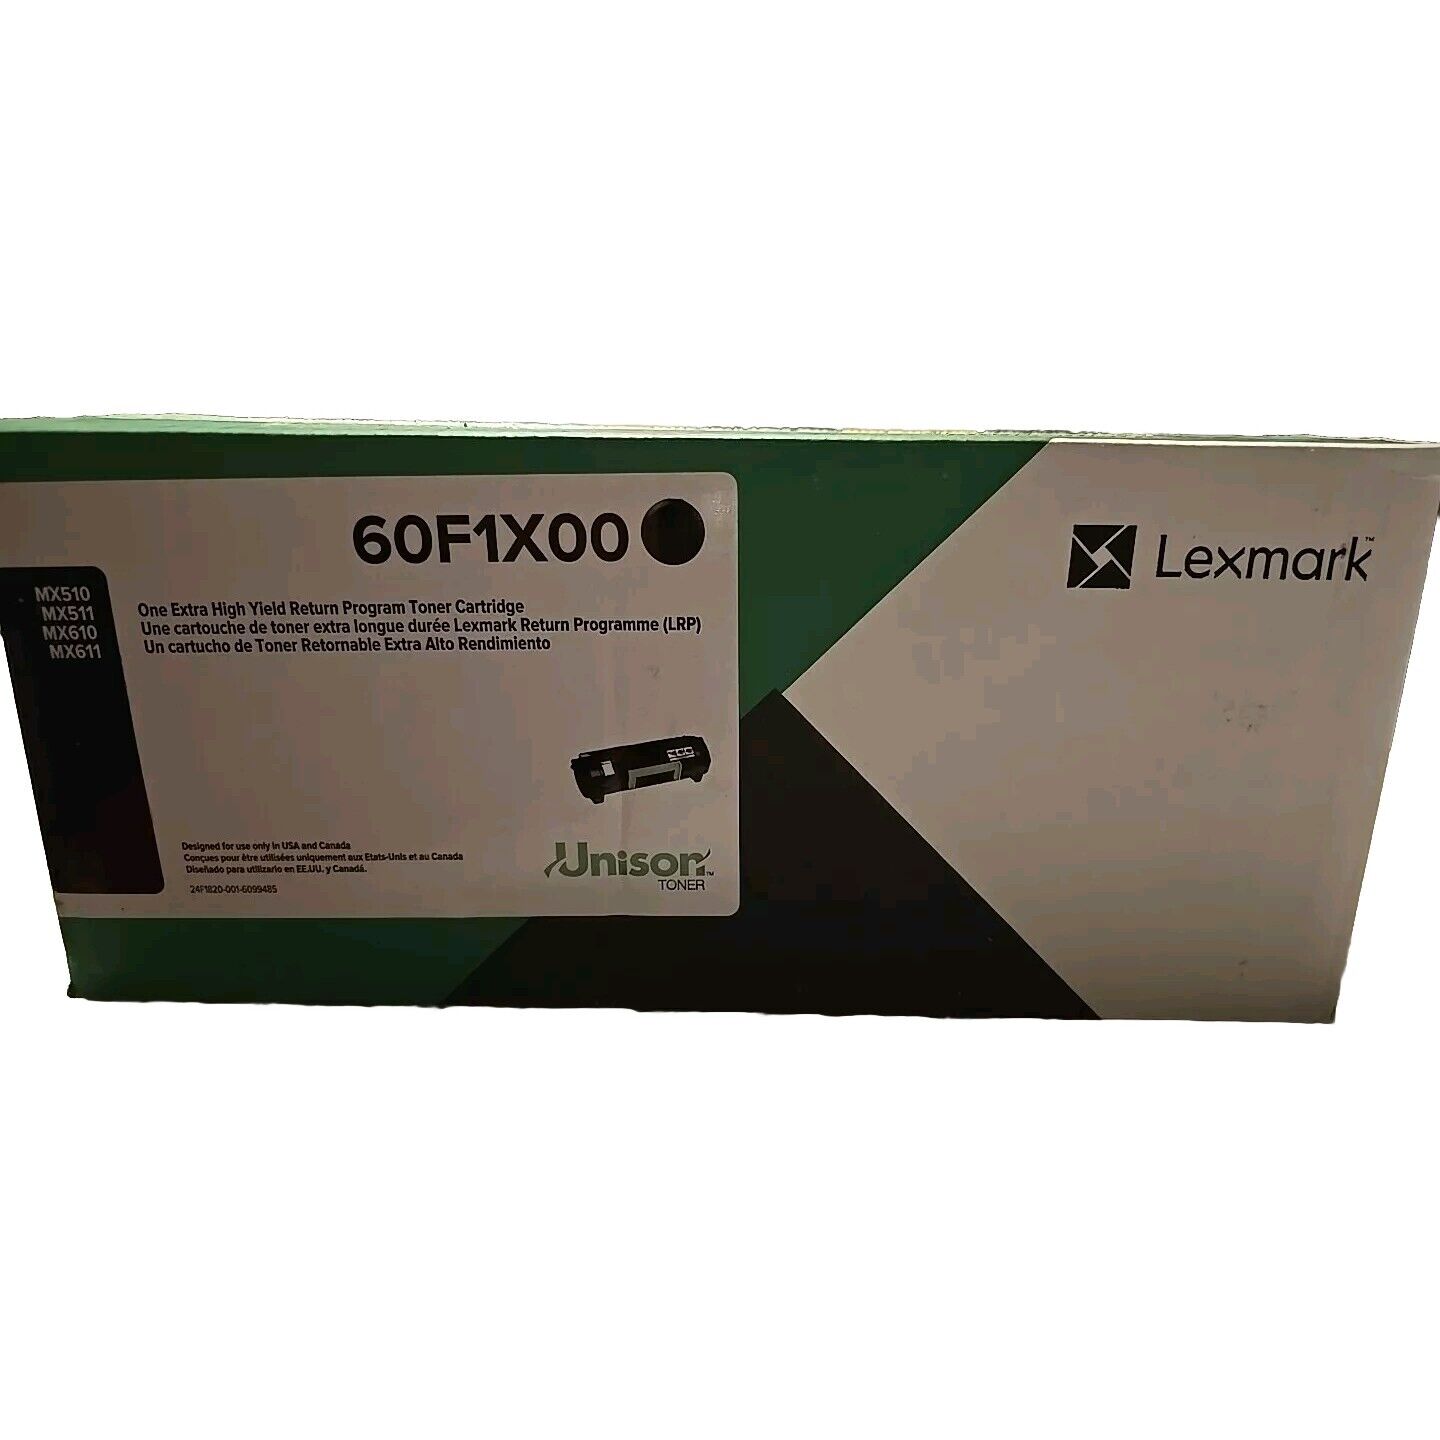 Genuine Lexmark 60F1X00 High Yield Return Program Toner Cartridge